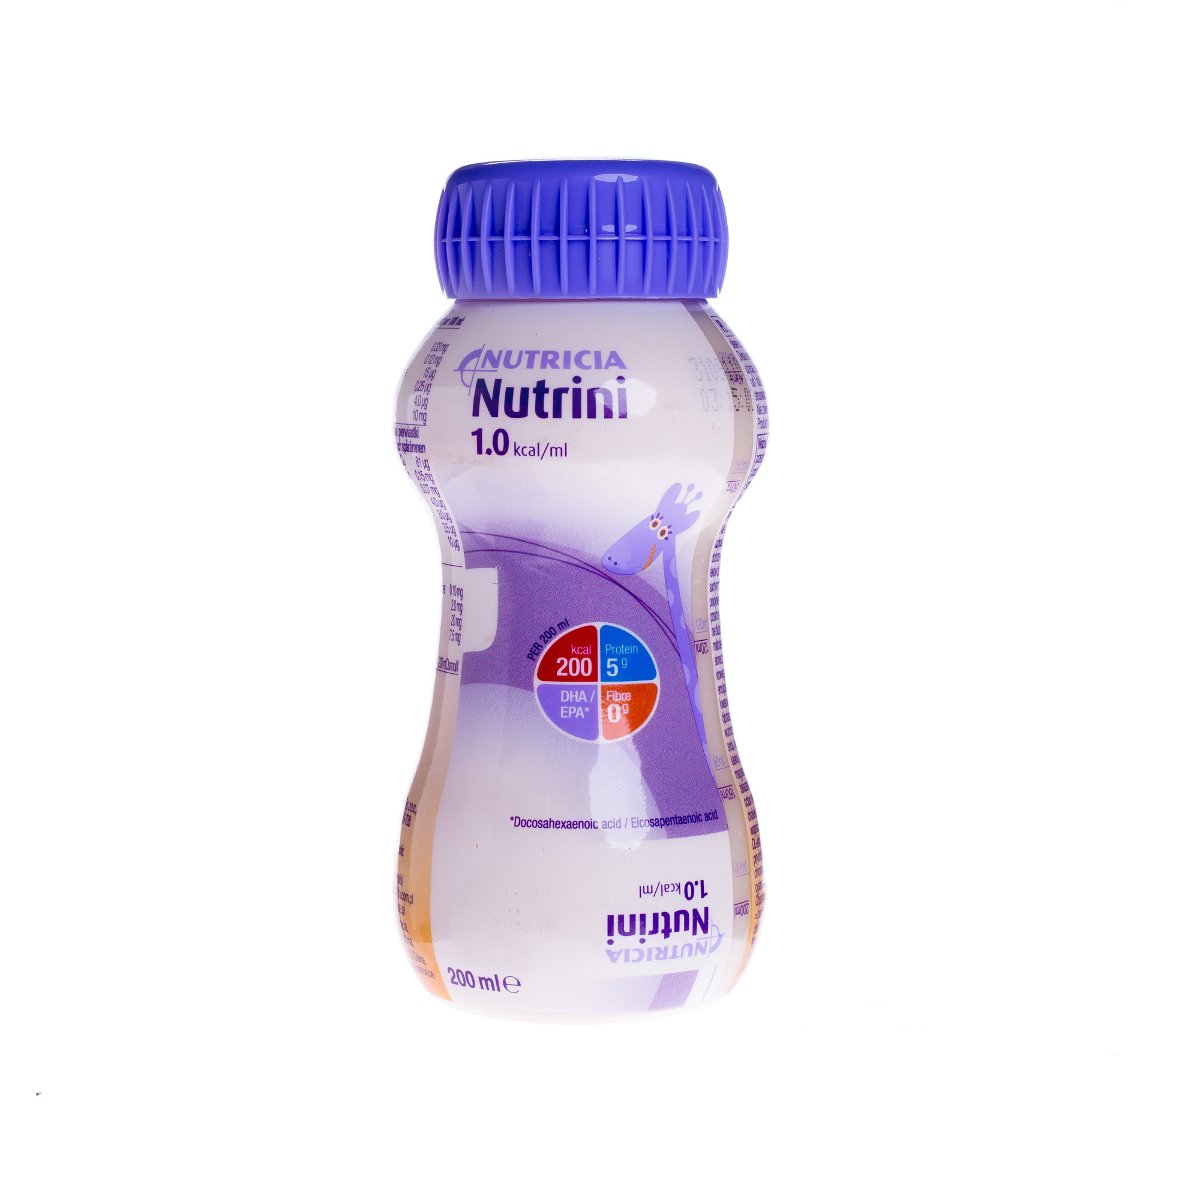 NUTRICIA Nutrini 200 ml butelka plastikowa